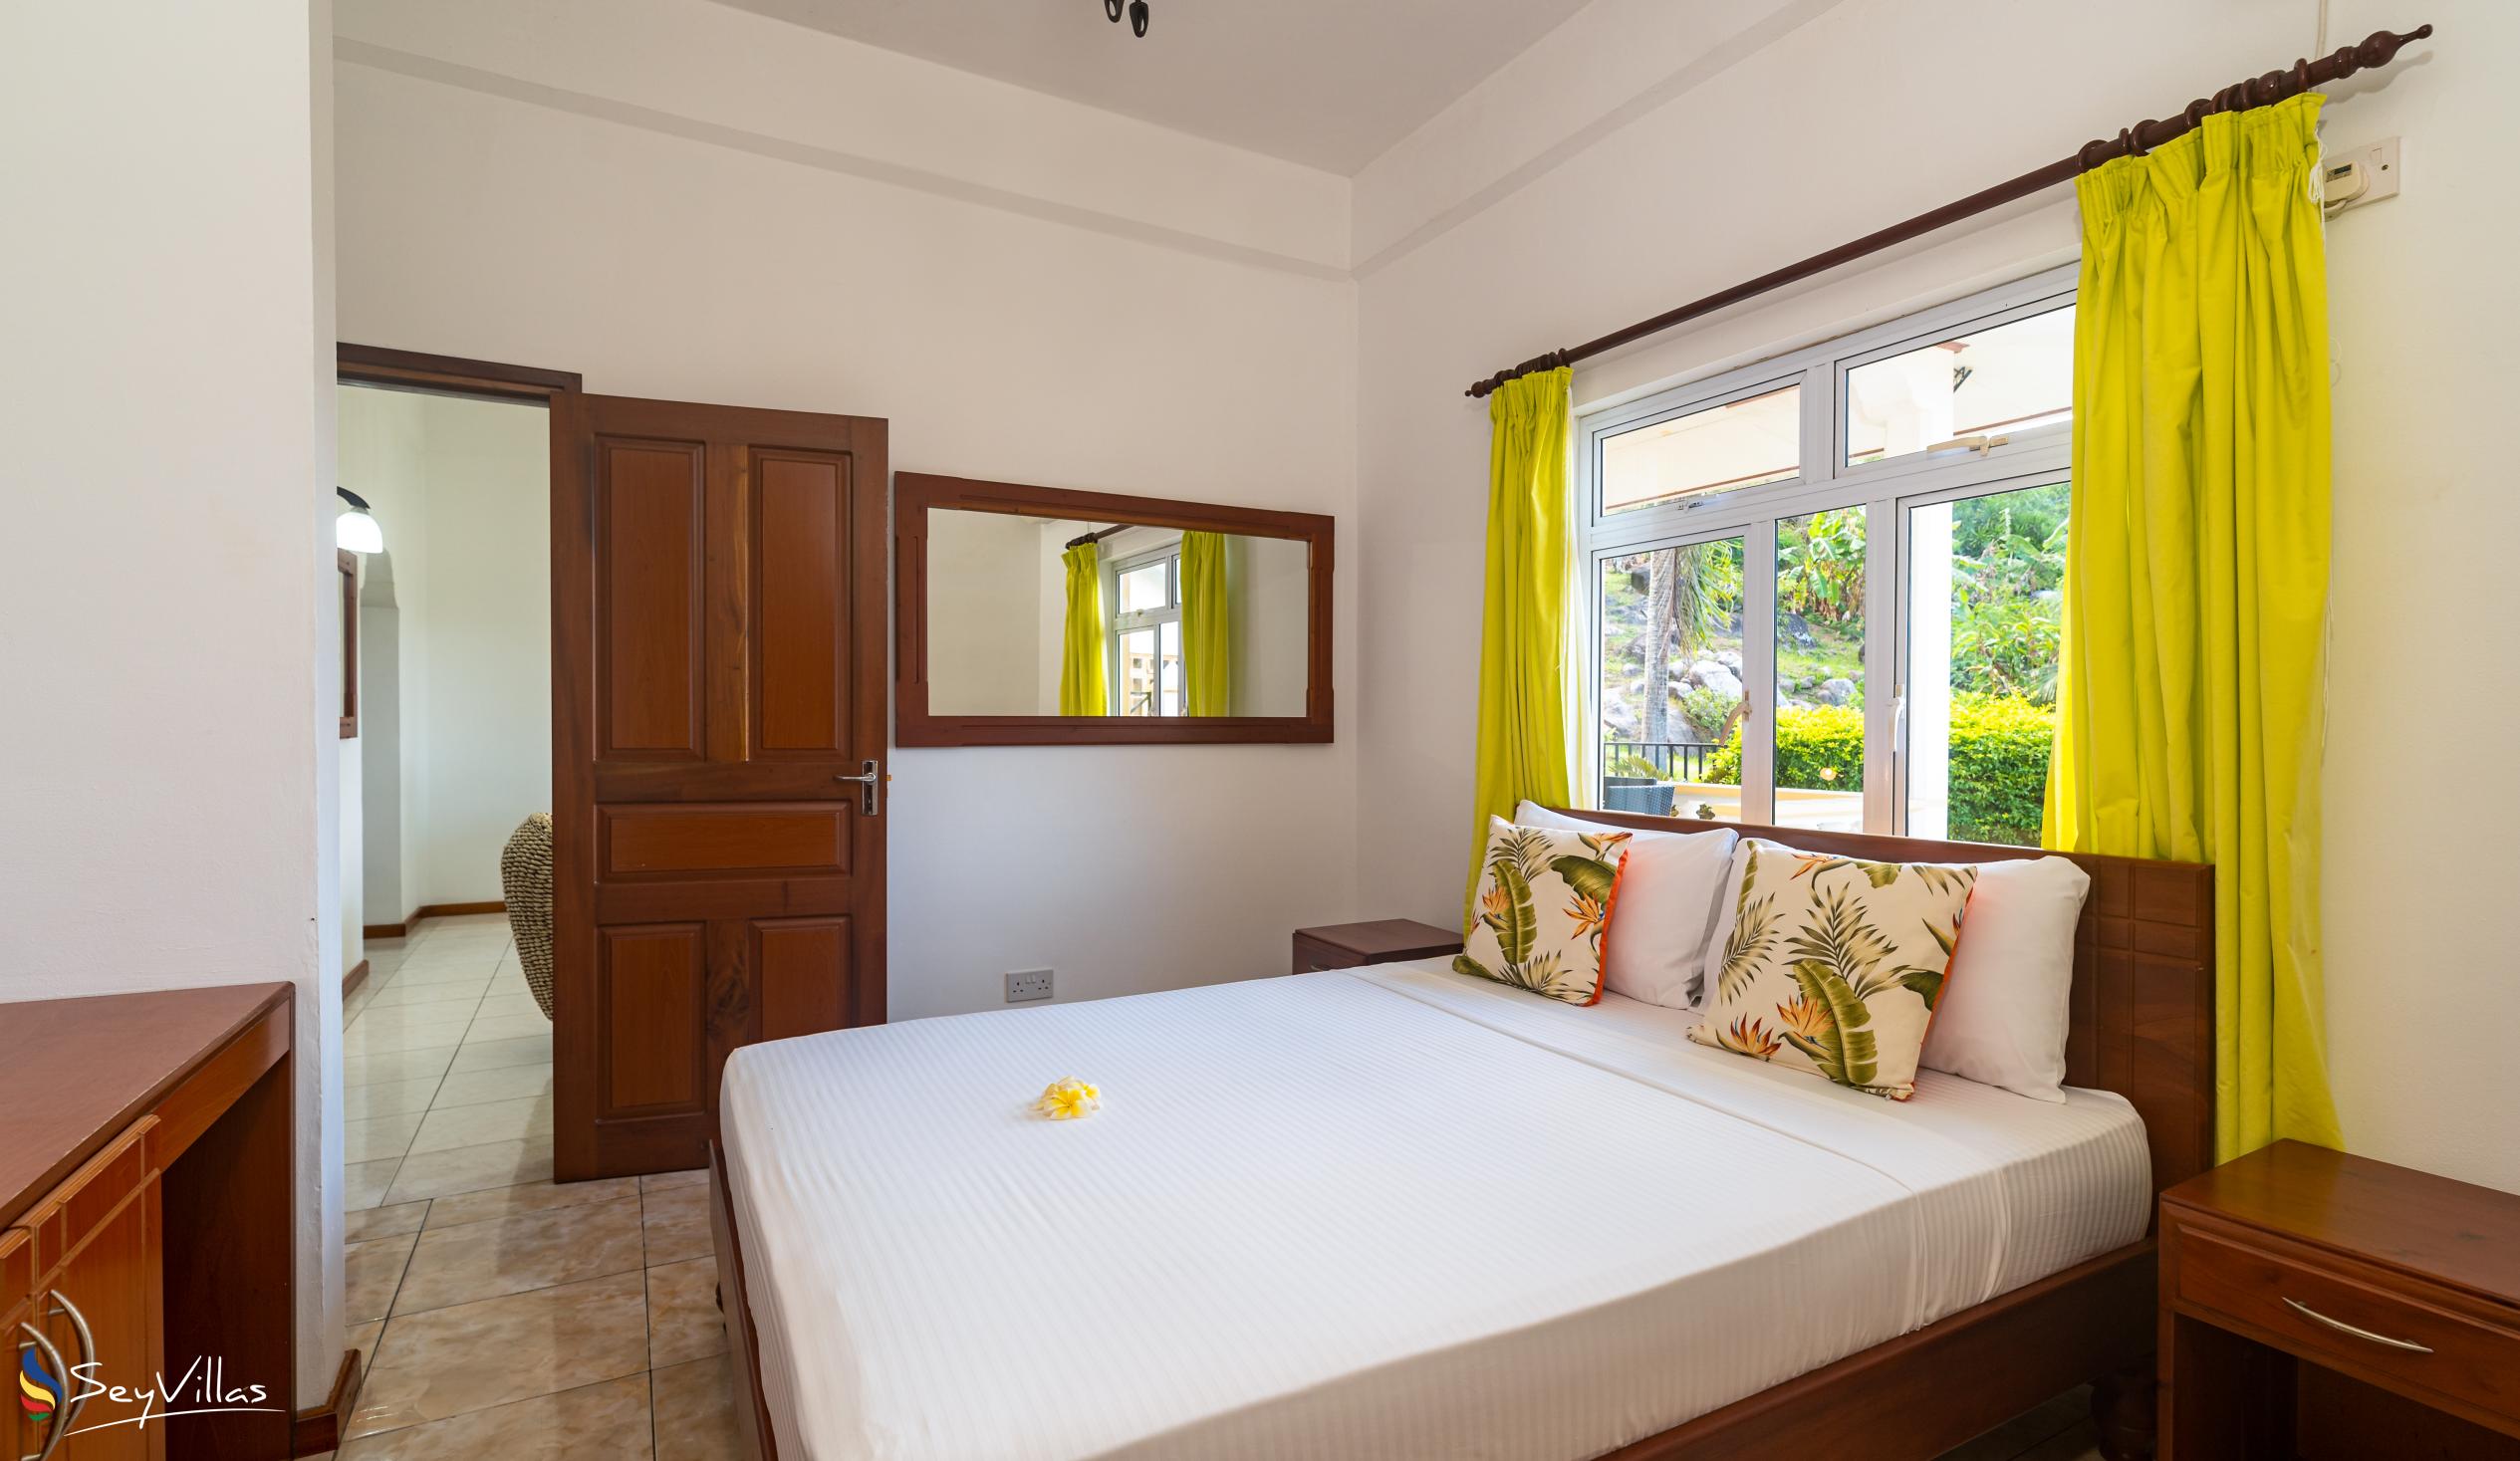 Foto 22: East Horizon - Appartamento con 2 camere e vista giardino - Mahé (Seychelles)